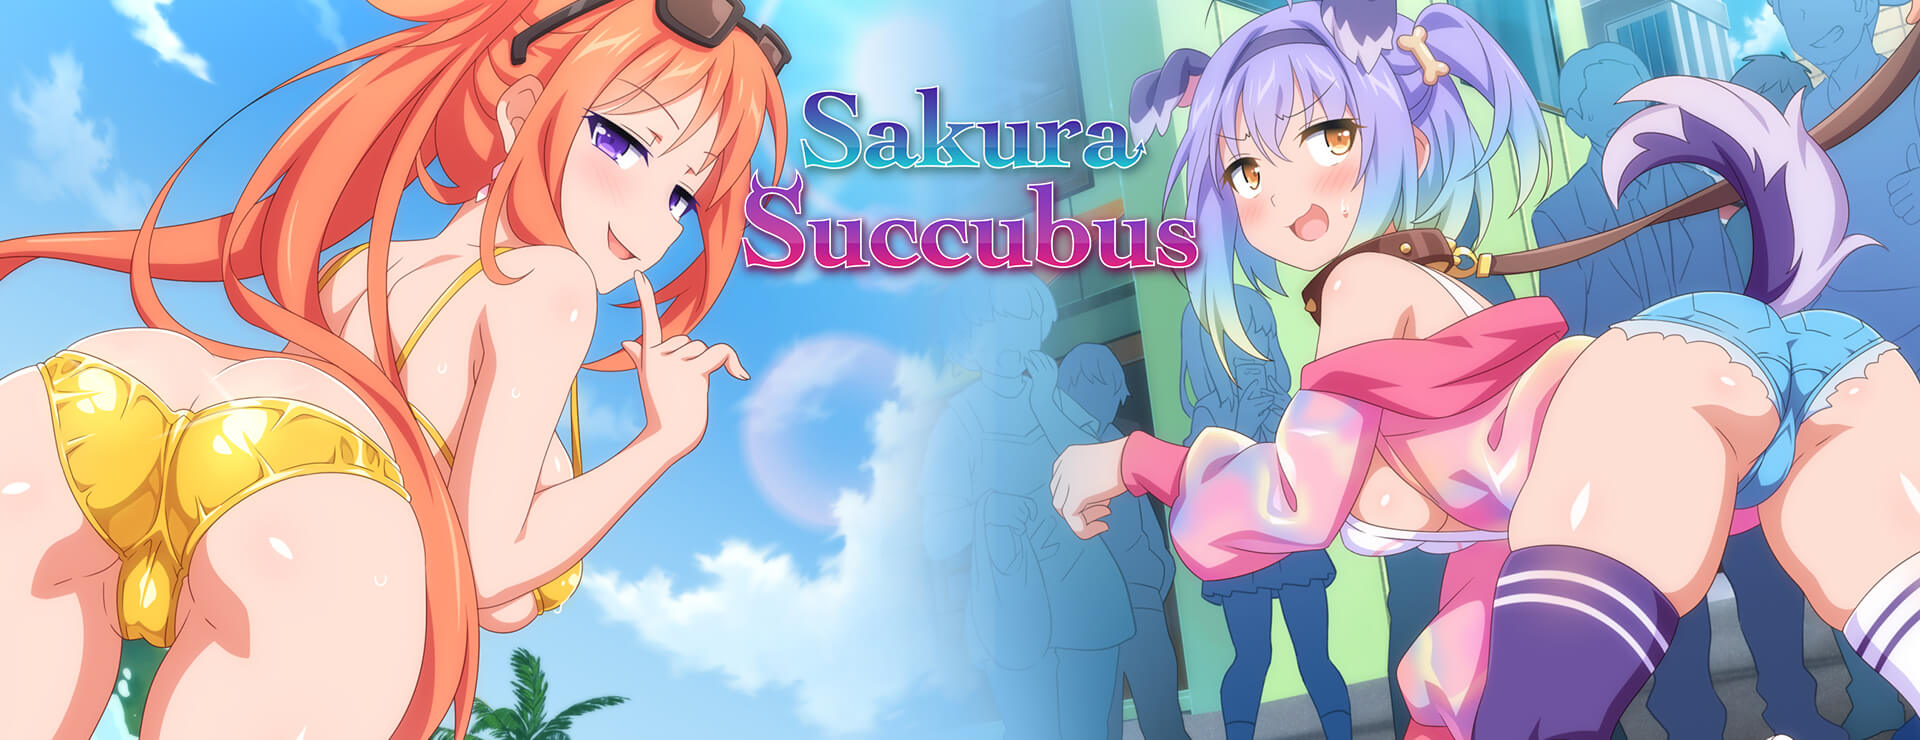 Sakura Succubus - Visual Novel Game